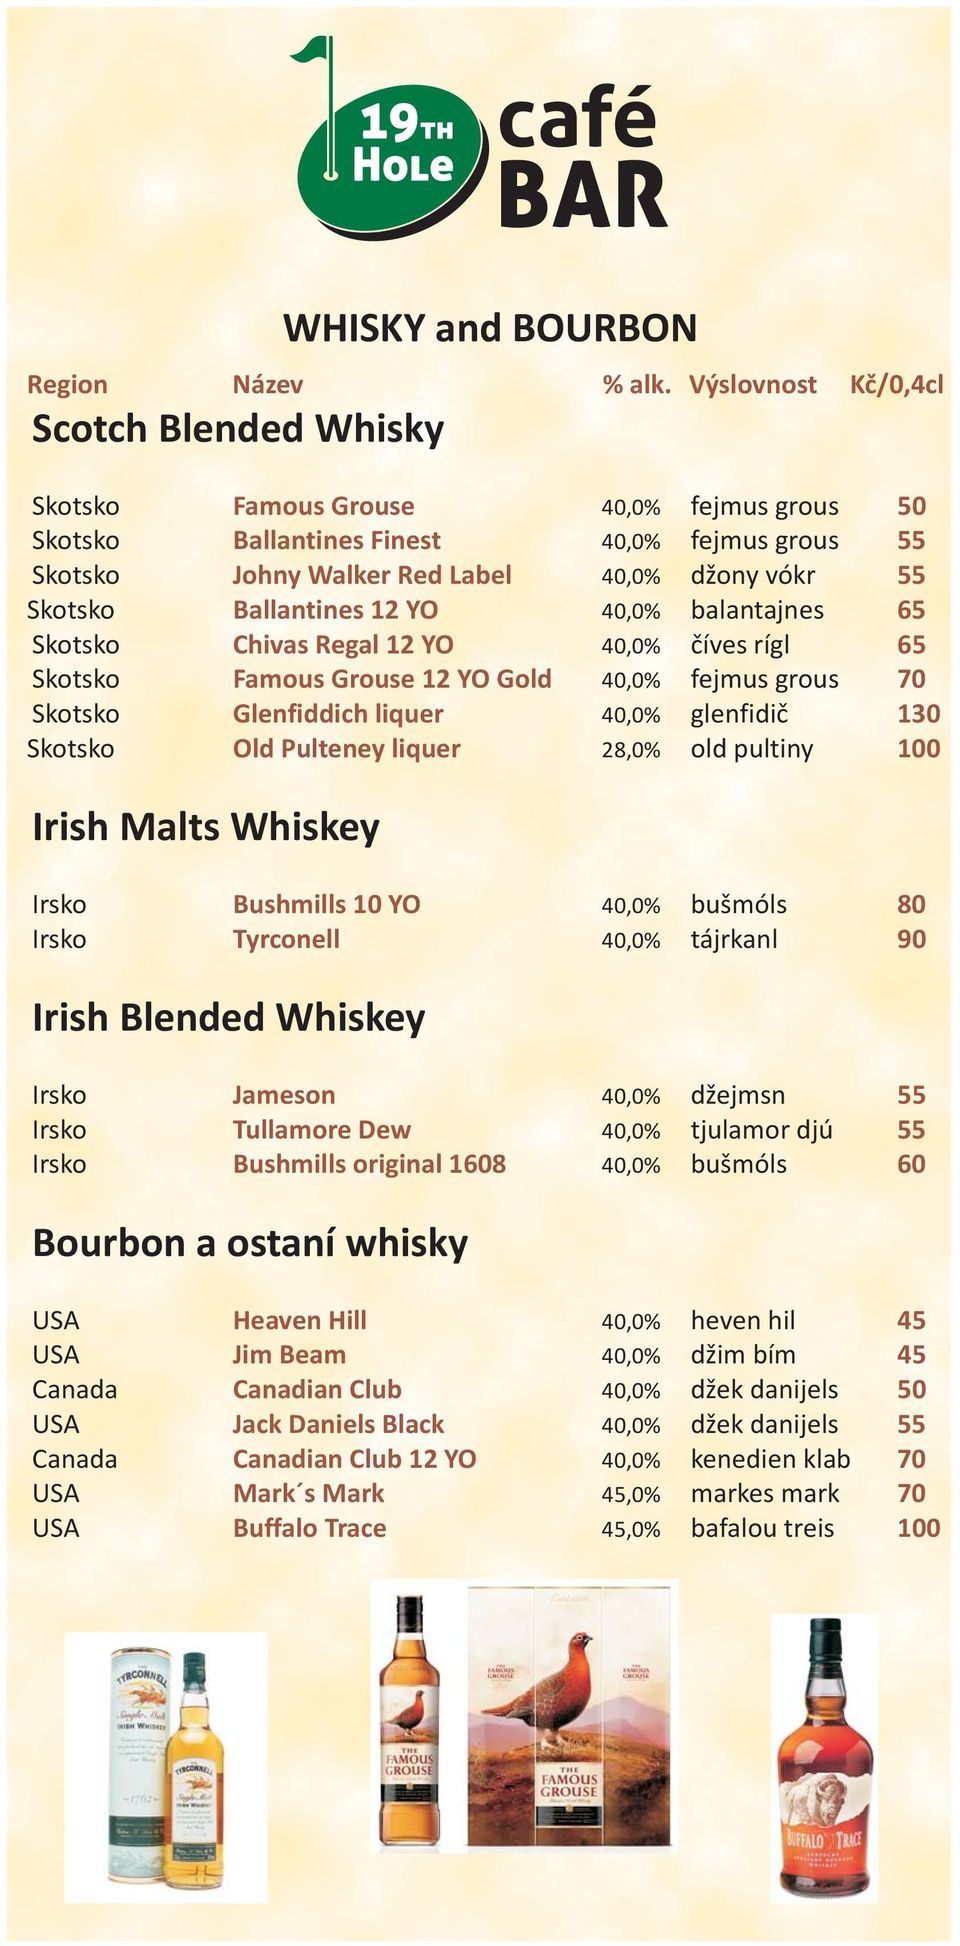 číves rígl Famous Grouse 12 YO Gold,0% fejmus grous Glenfiddich liquer,0% glenfidič 130 Old Pulteney liquer 28,0% old pultiny 100 Irish Malts Whiskey Bushmills 10 YO,0% bušmóls 80 Tyrconell,0%